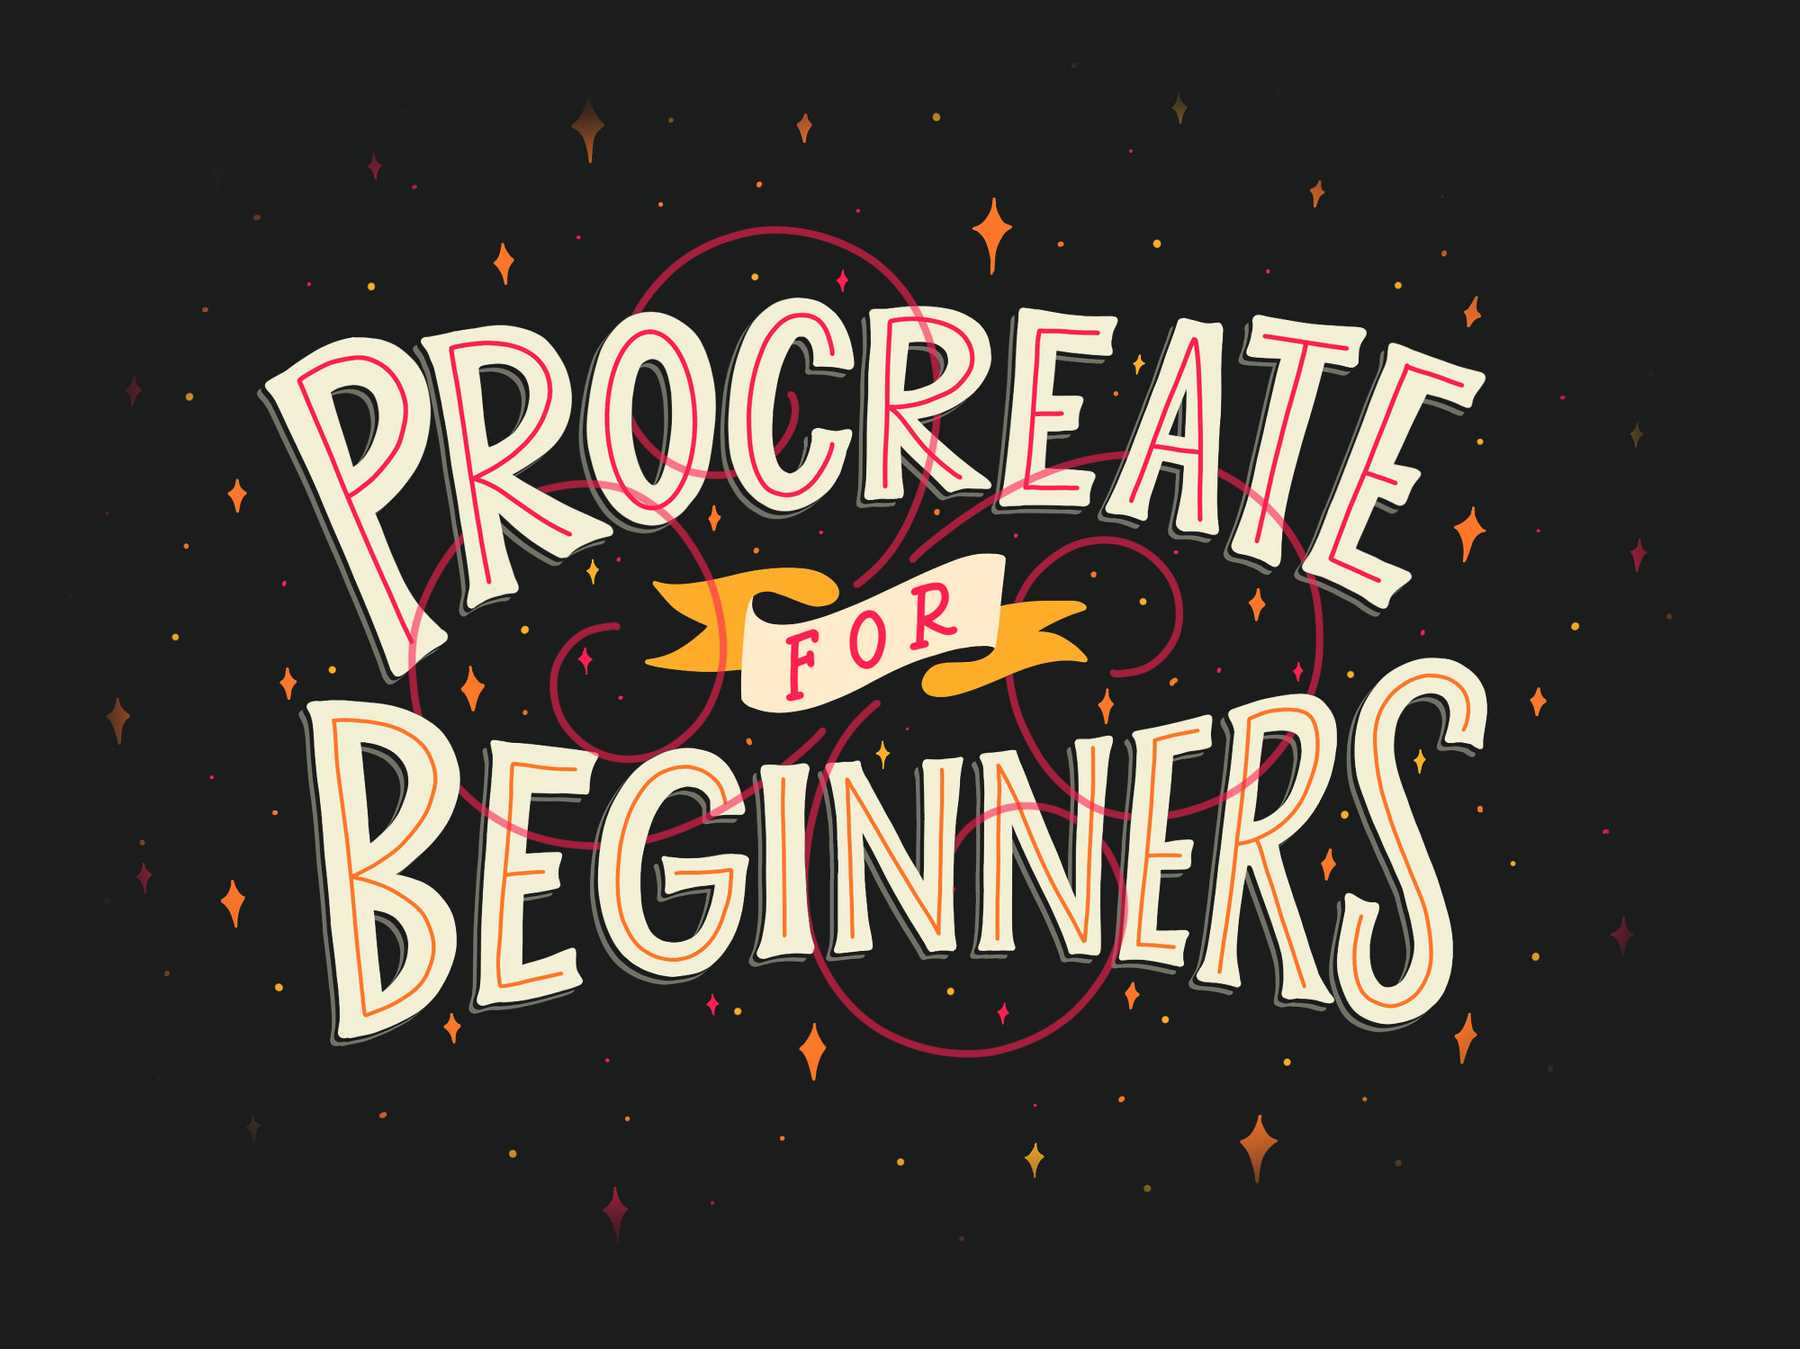 procreate beginners